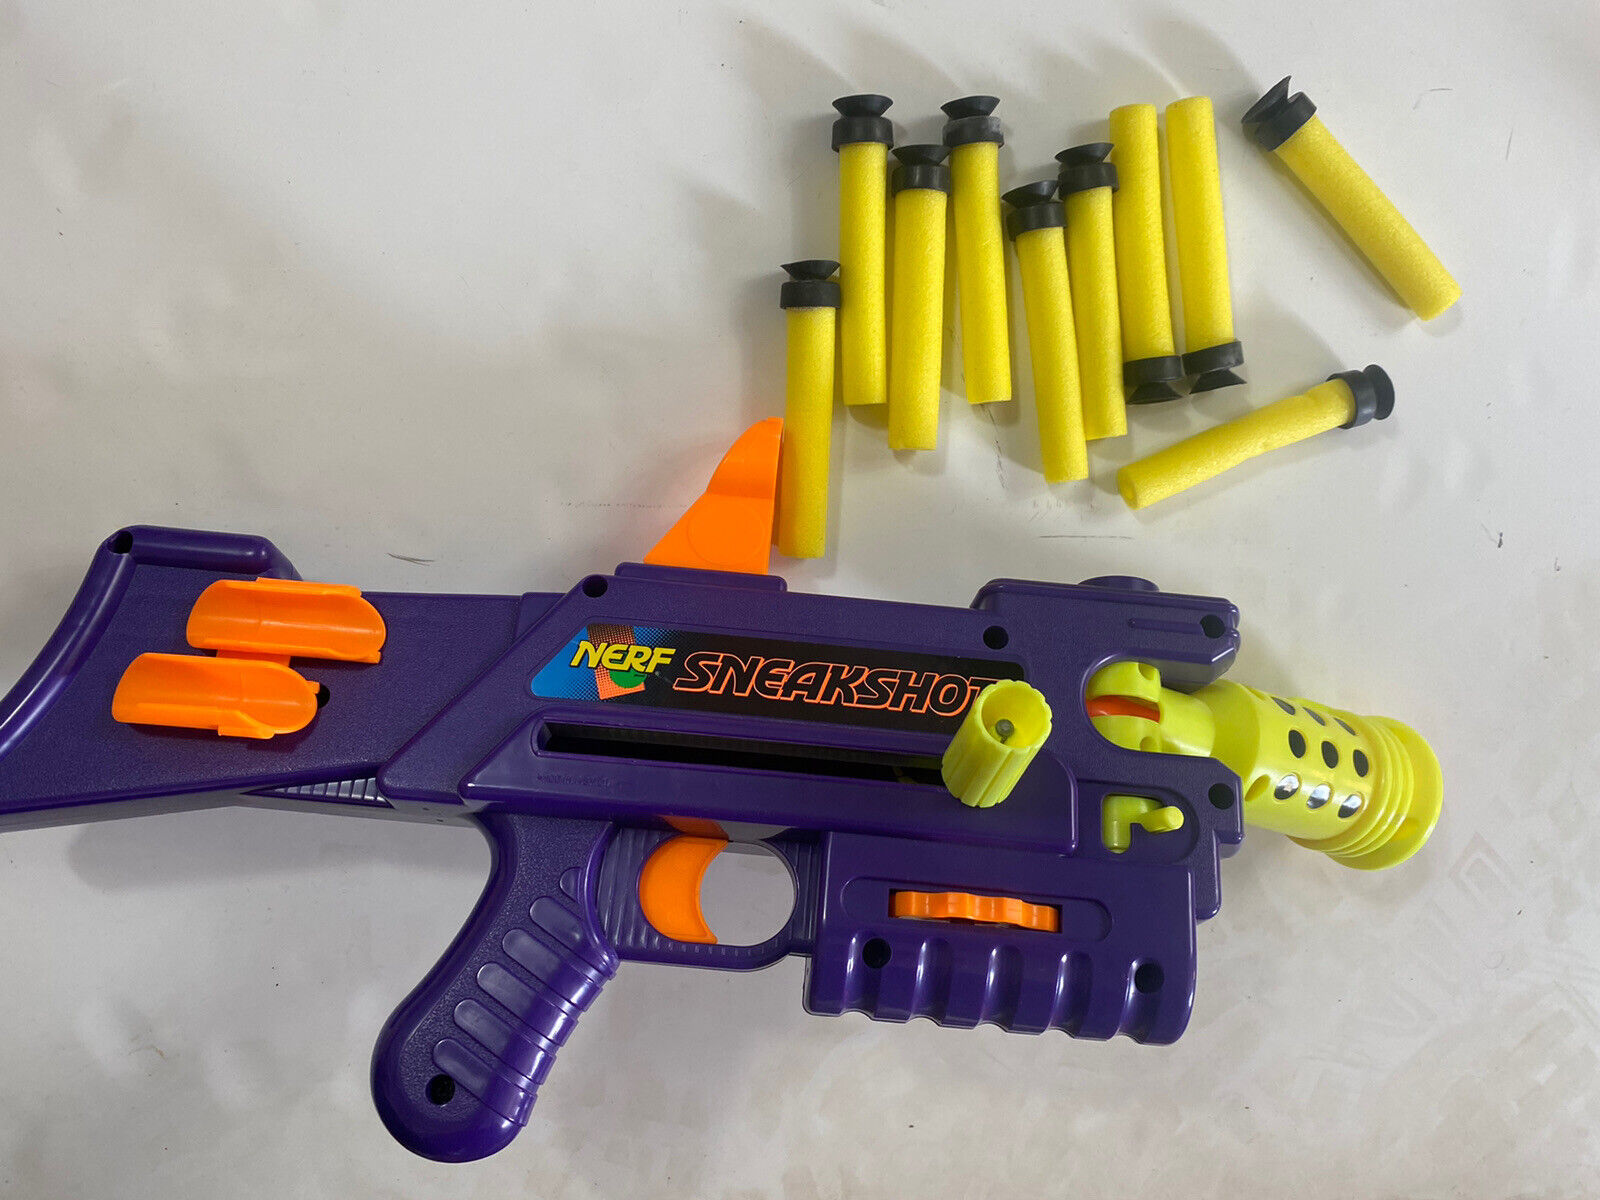 Vintage NERF Sneak Shot Corner Shooter Toy Gun Kenner Dart 【美品】 激安価格と即納で通信販売 1994